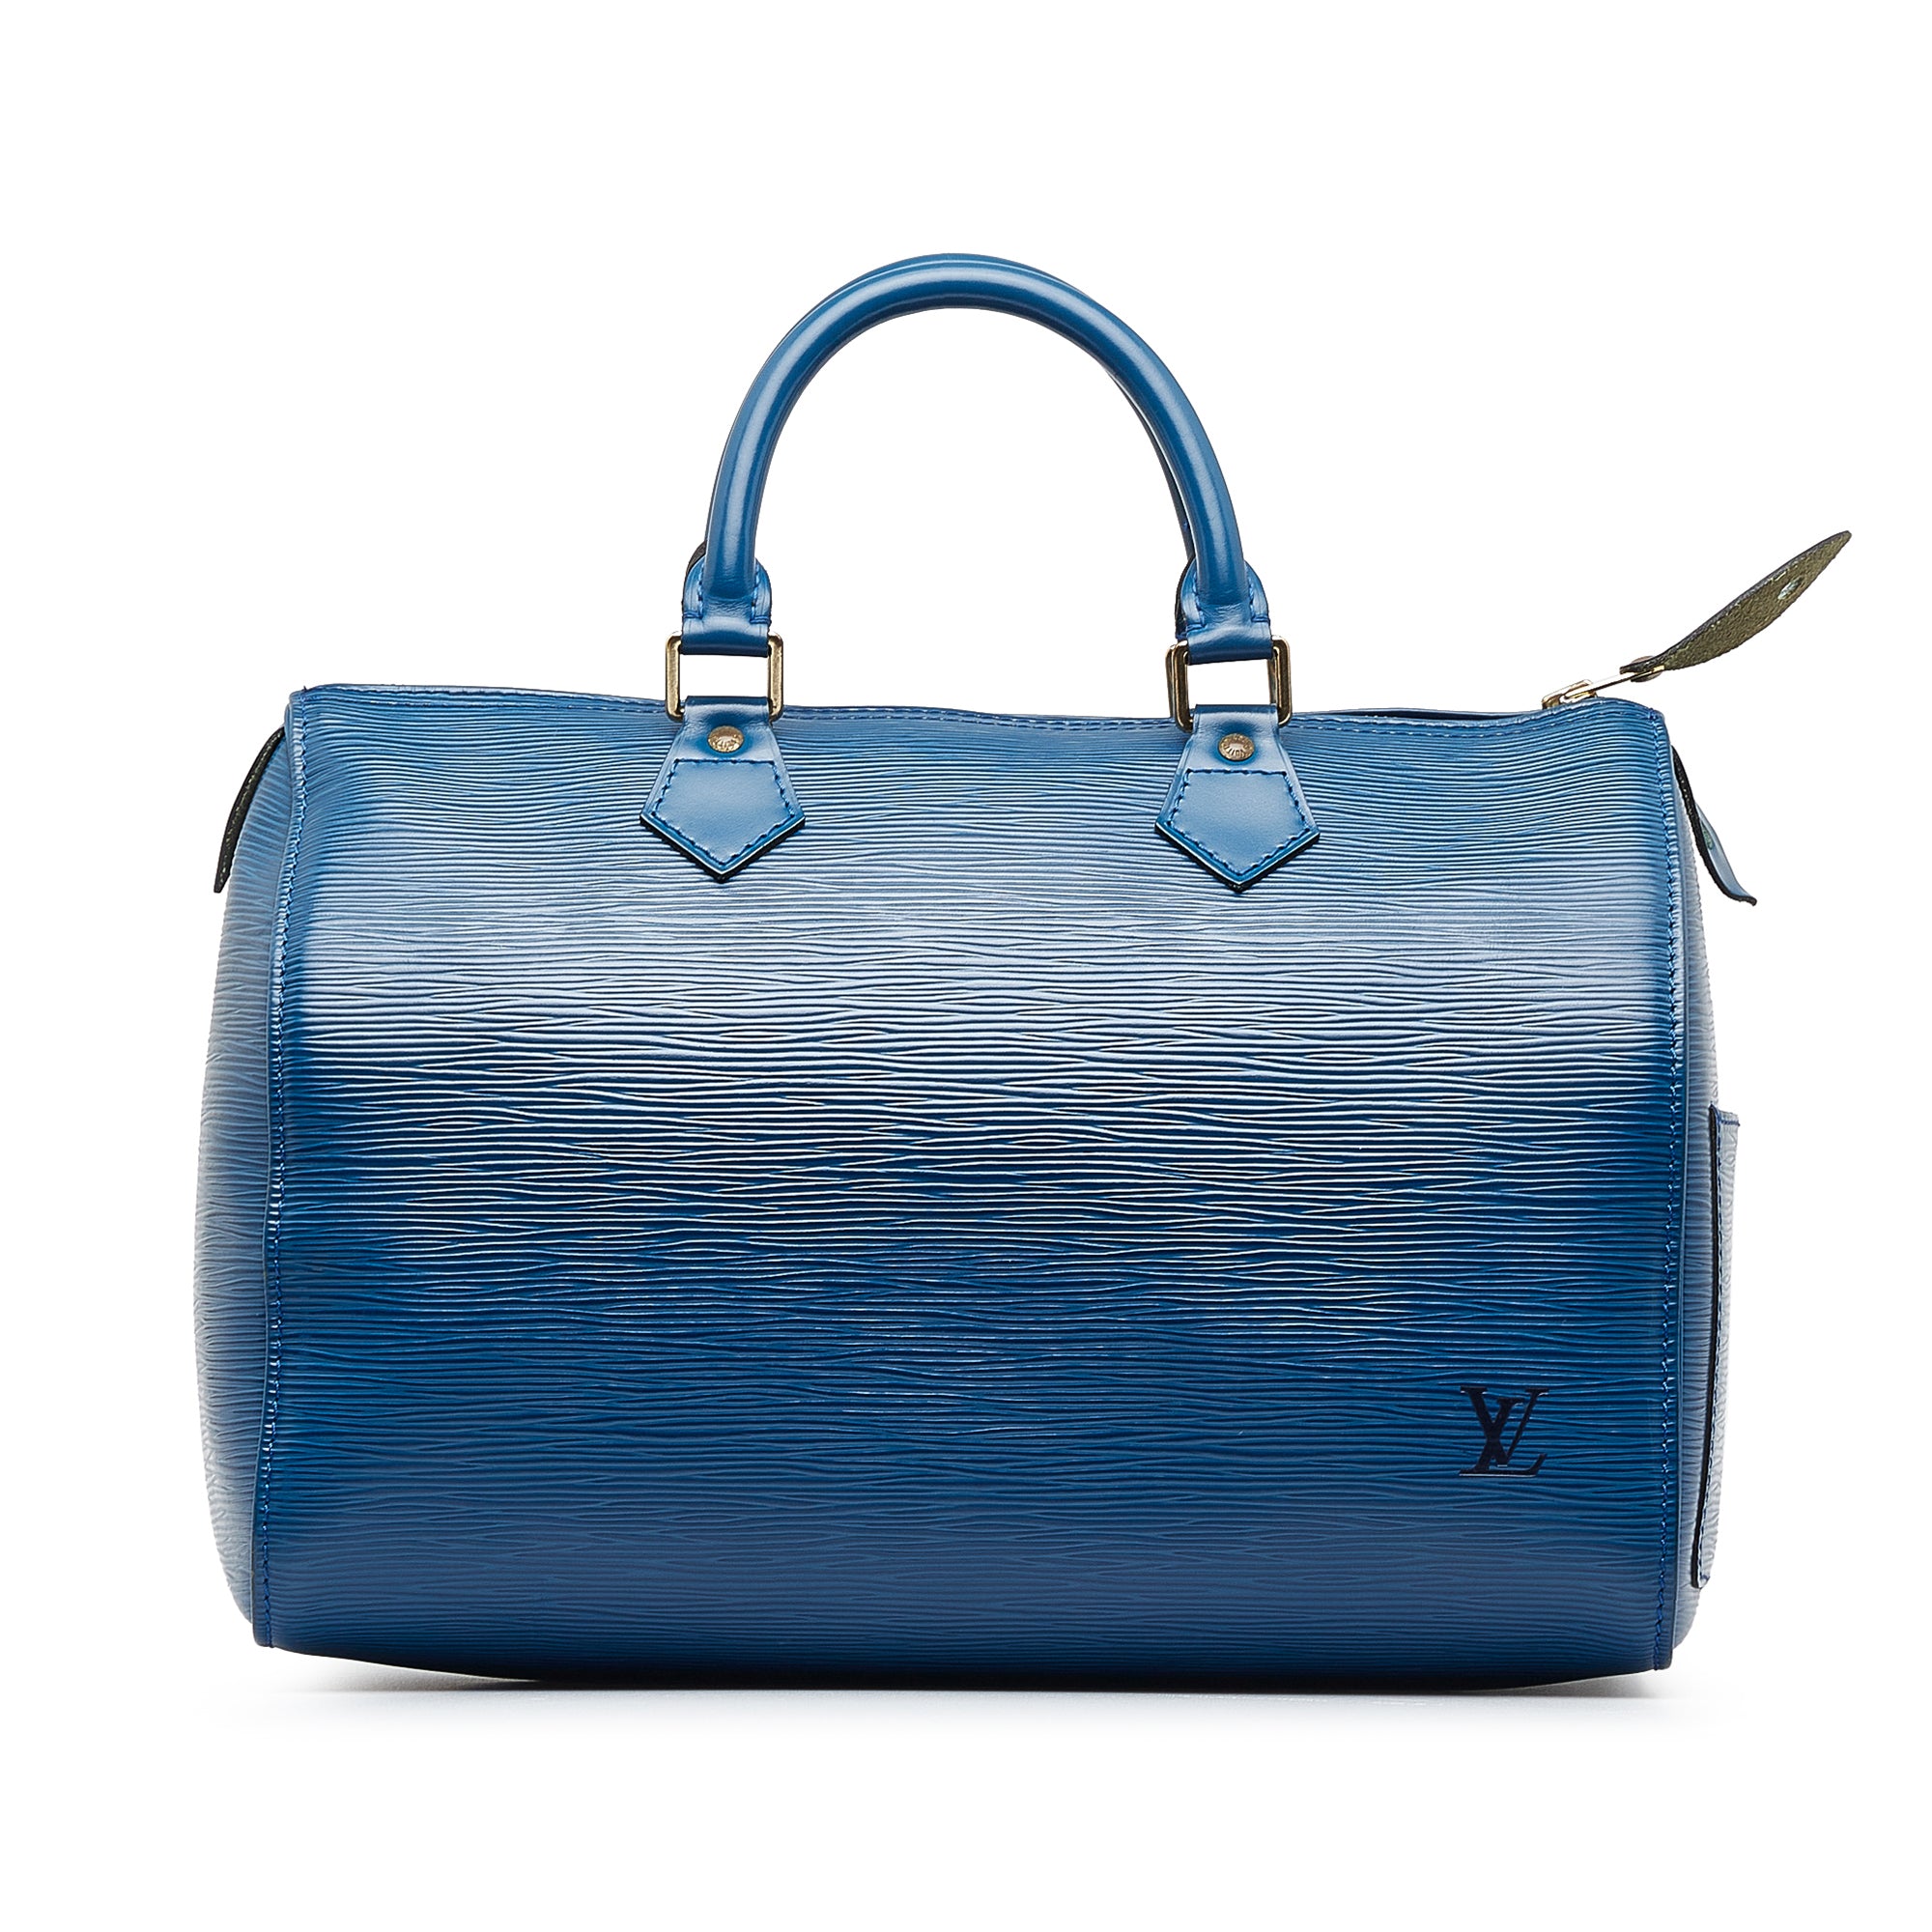 Louis Vuitton Green Monogram Denim Neo Speedy 30 Top Handle Bag